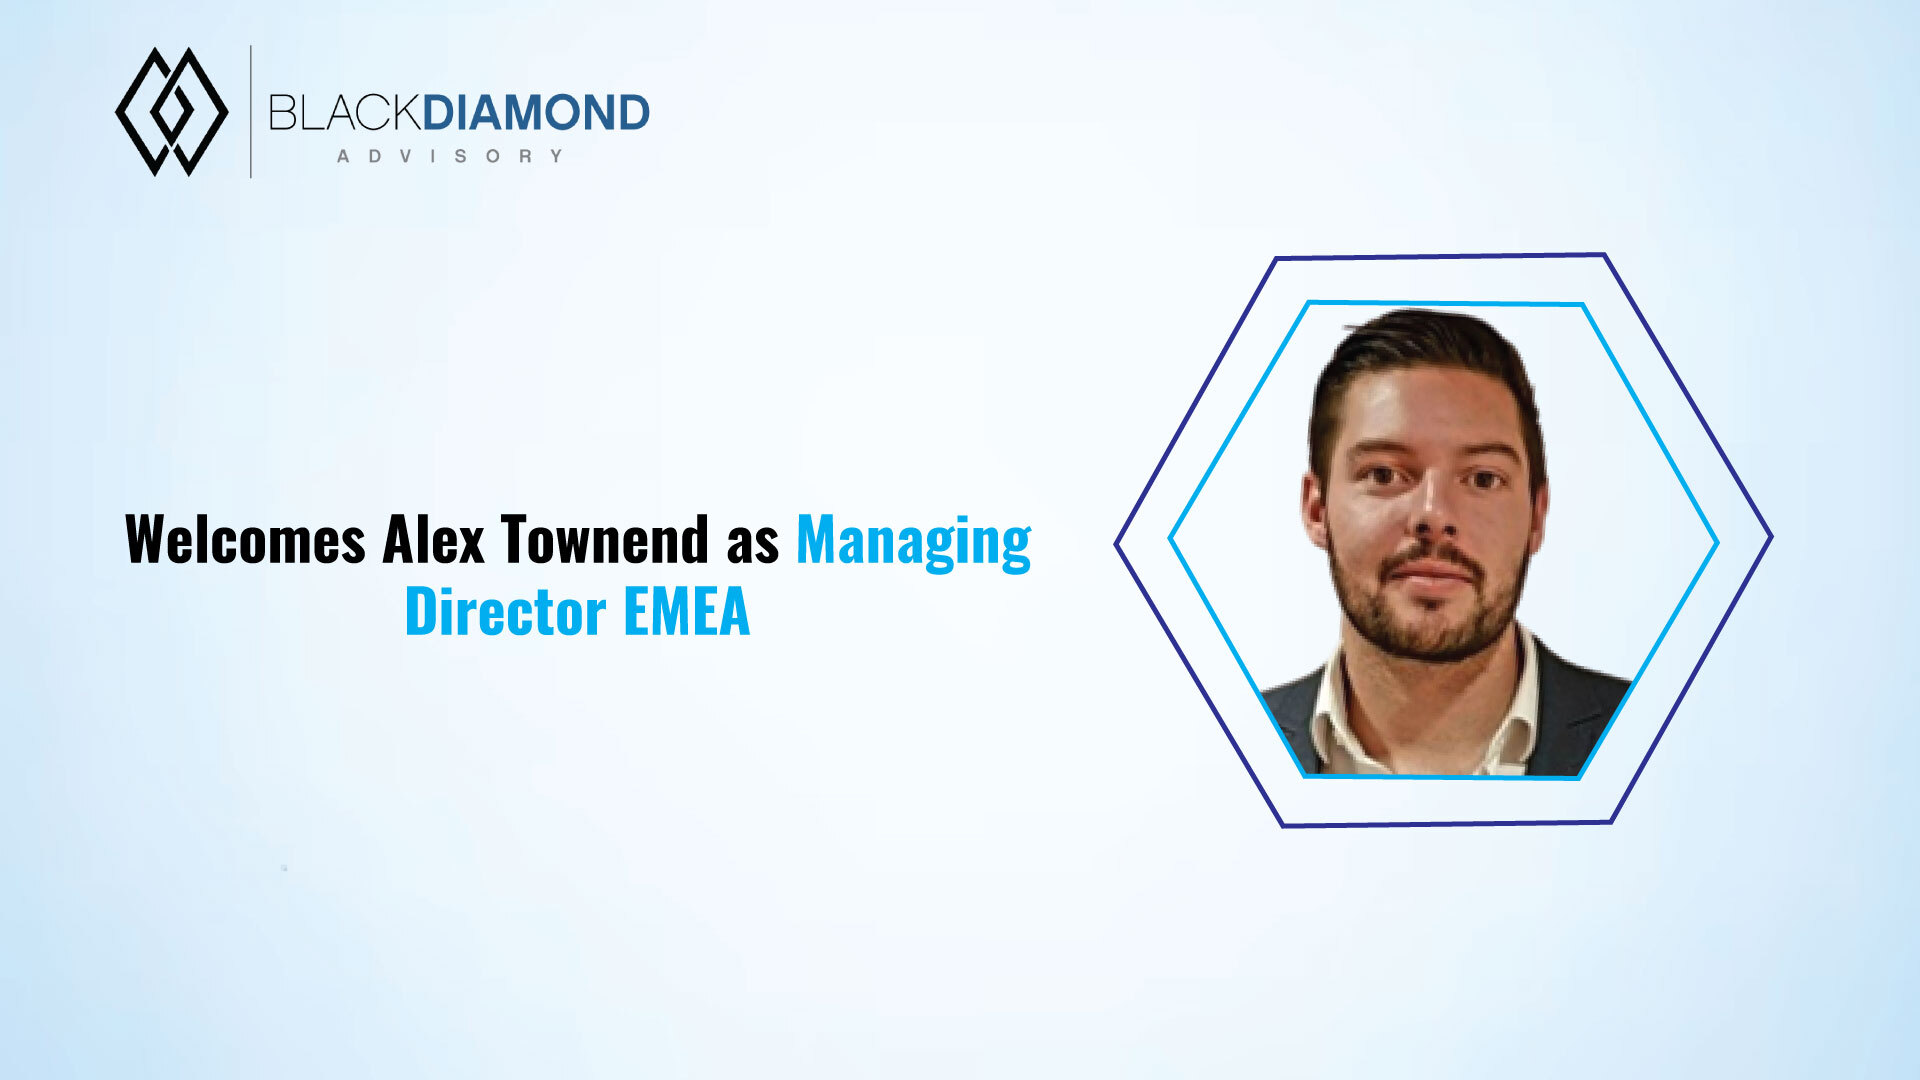 Black Diamond Advisory Welcomes Alex Townend as Managing Director EMEA